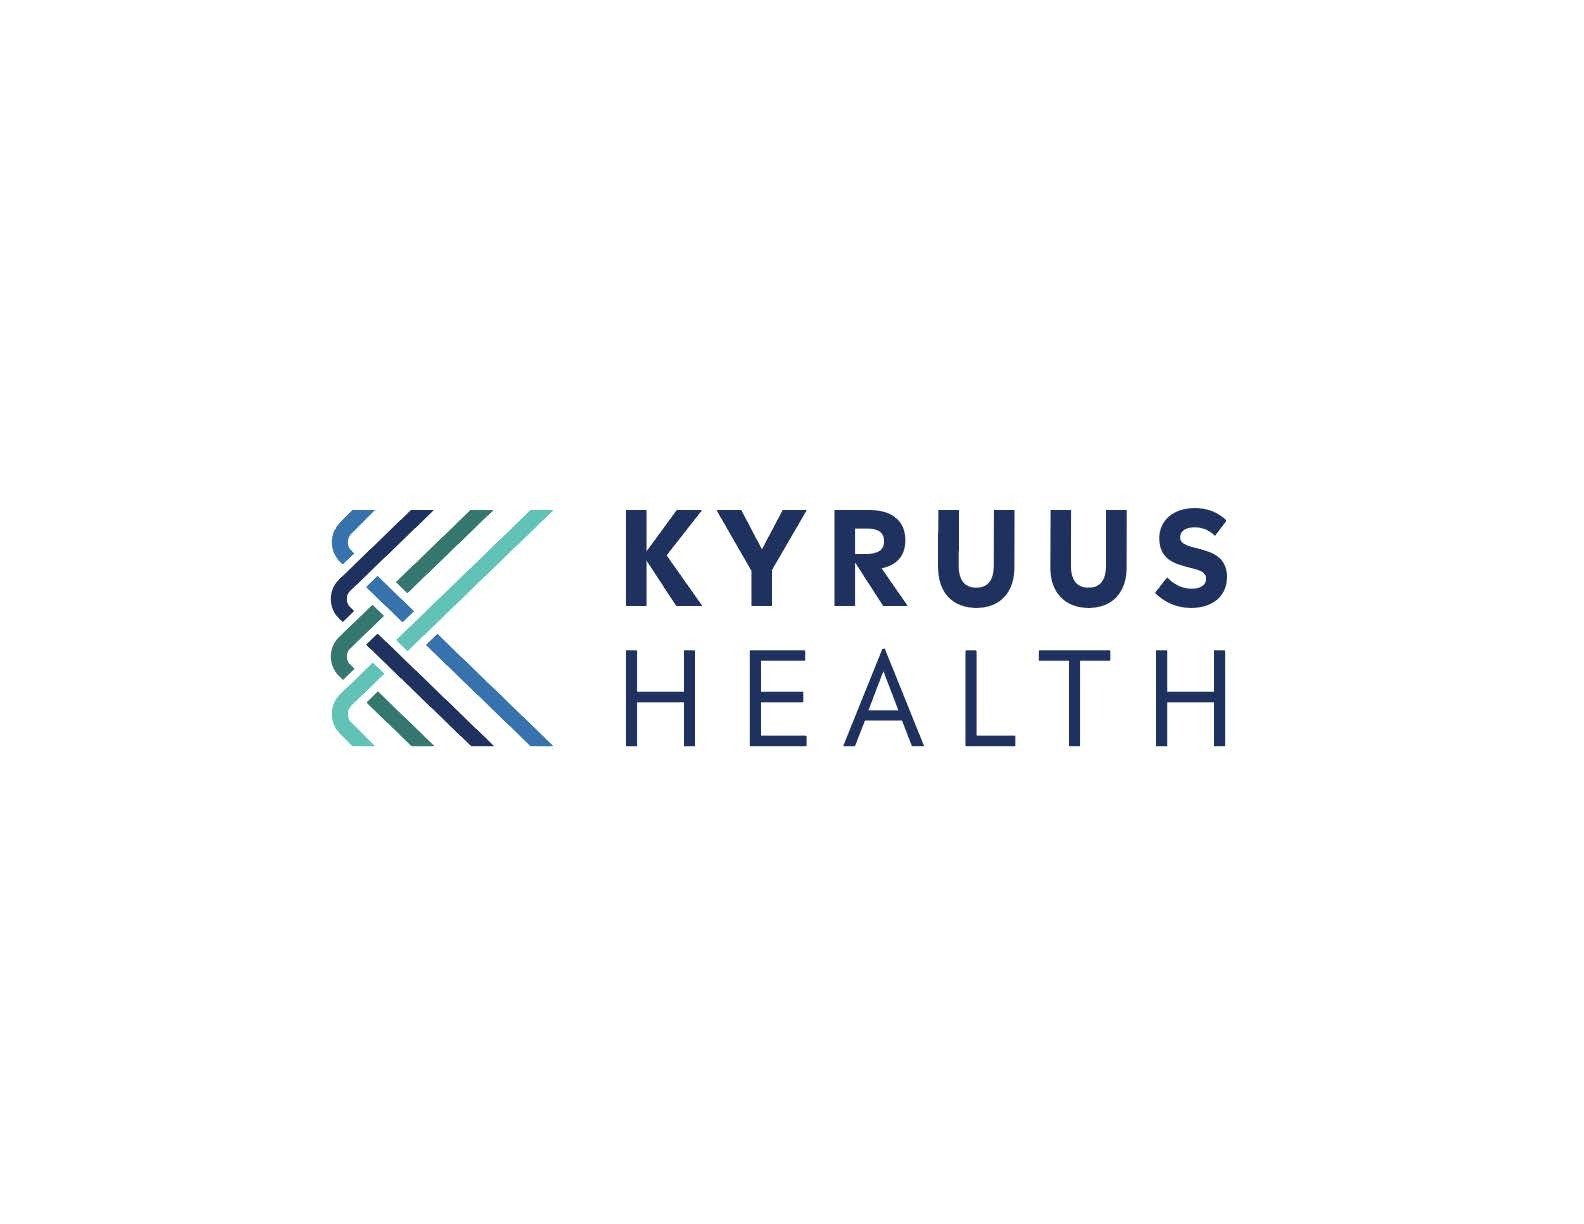 Kyruus Health